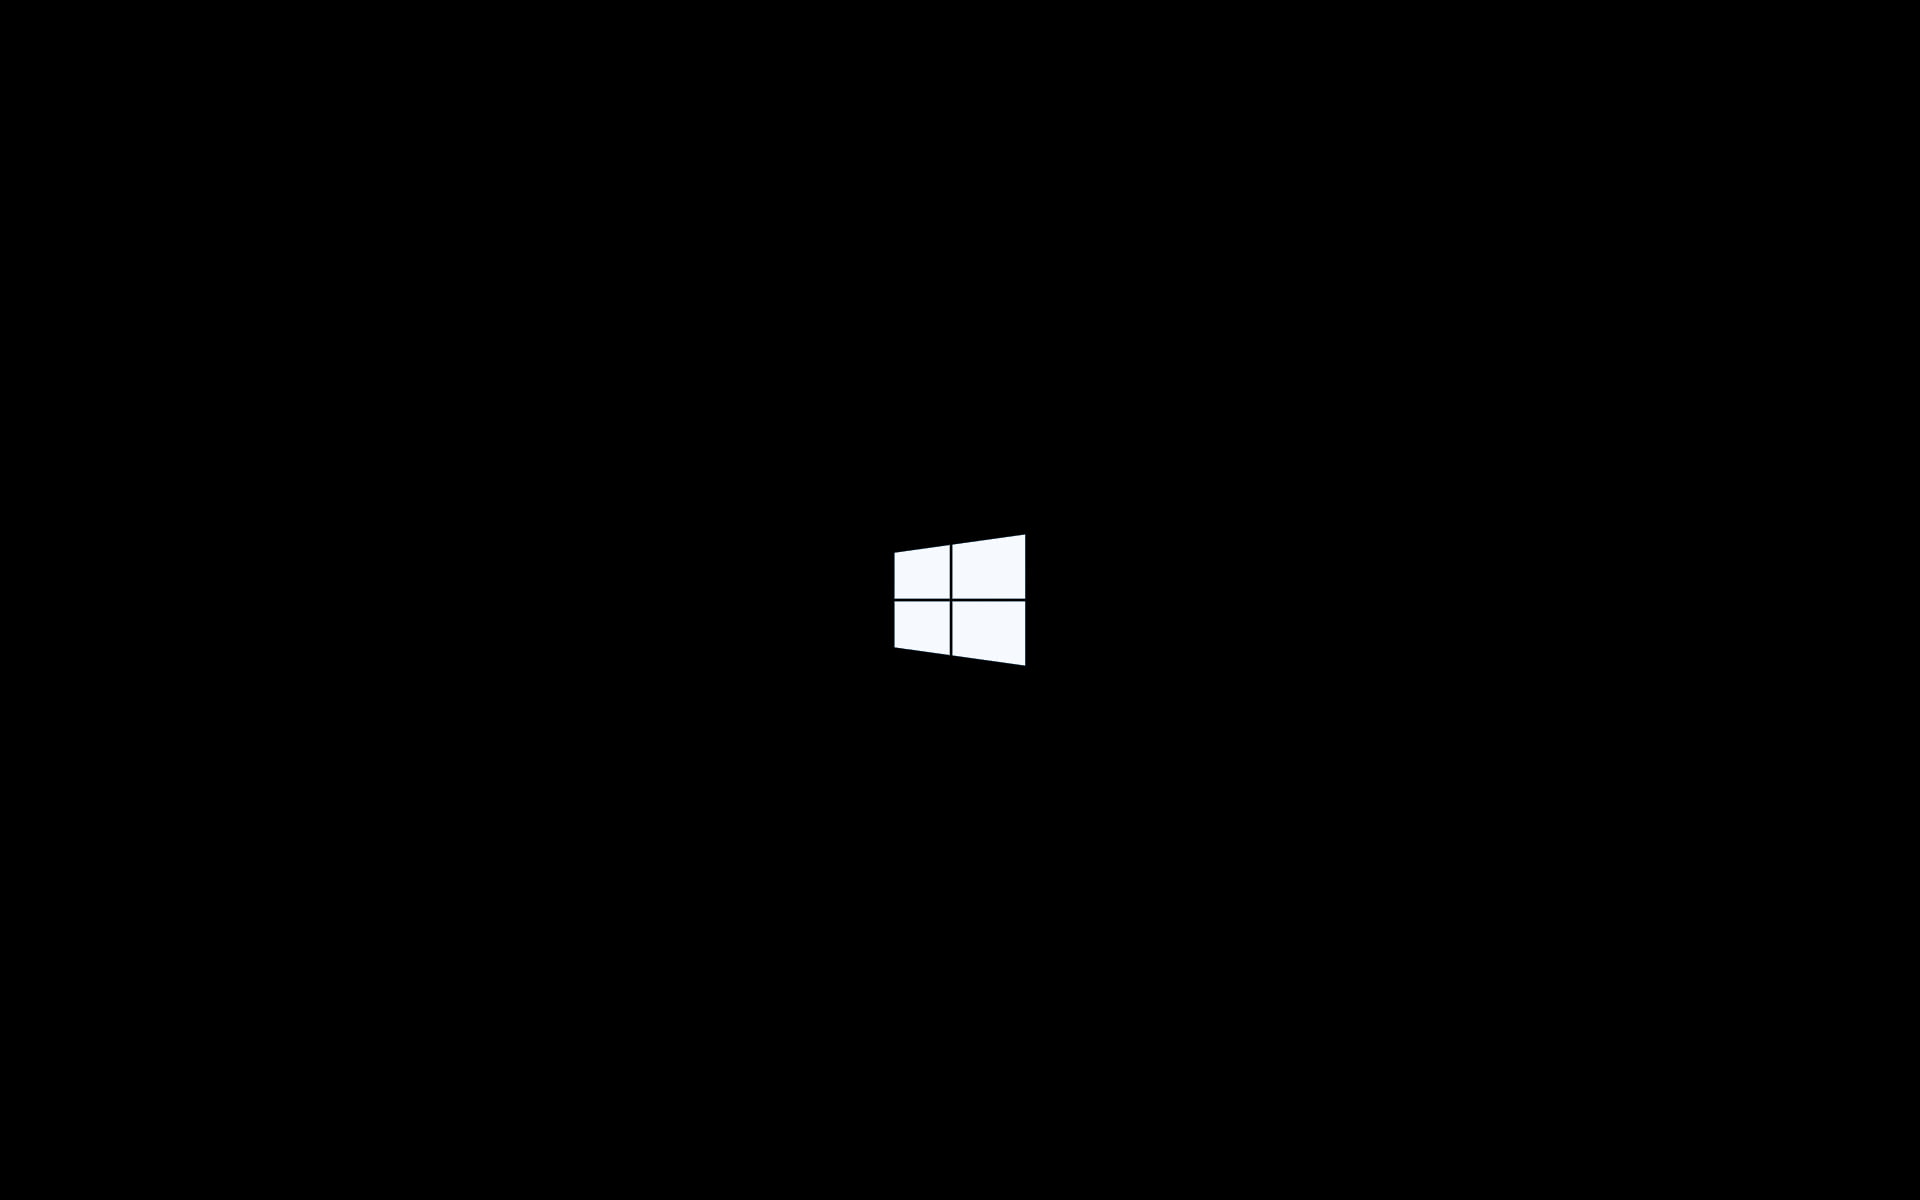 Windows 10, Microsoft Windows, operating system, minimalism